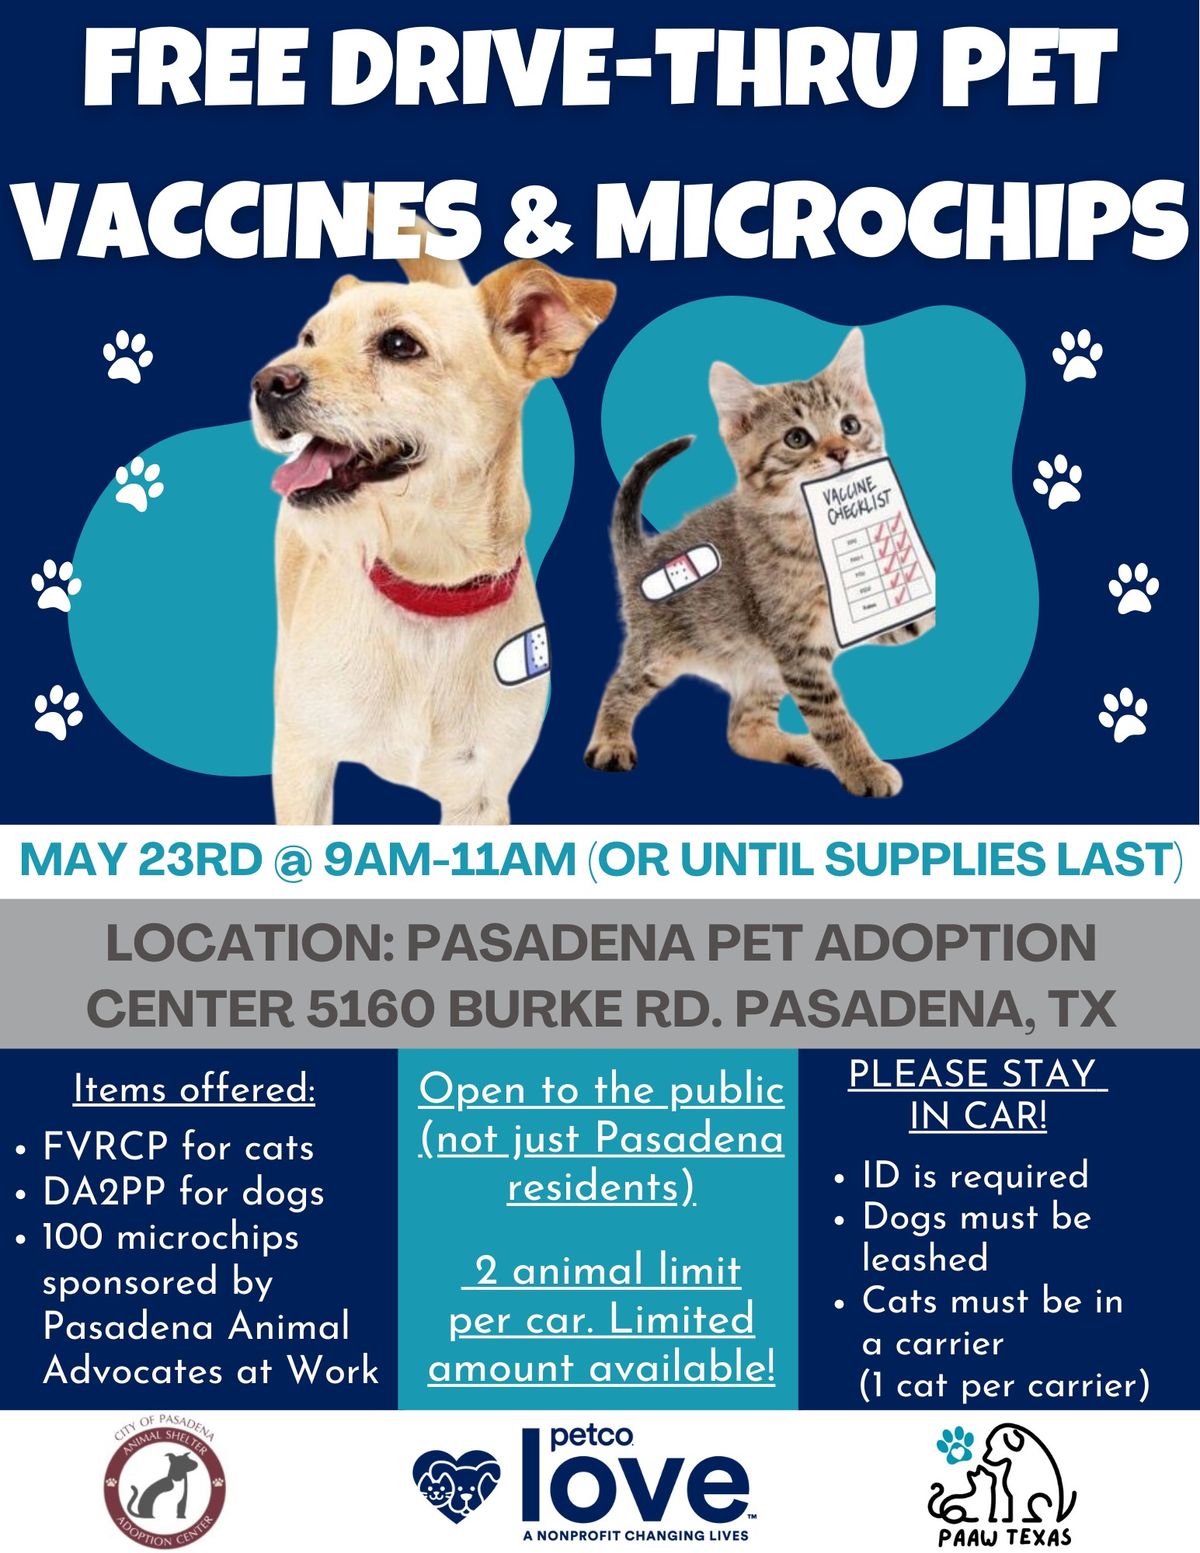 Free Drive-thru Pet Vaccines & Microchips